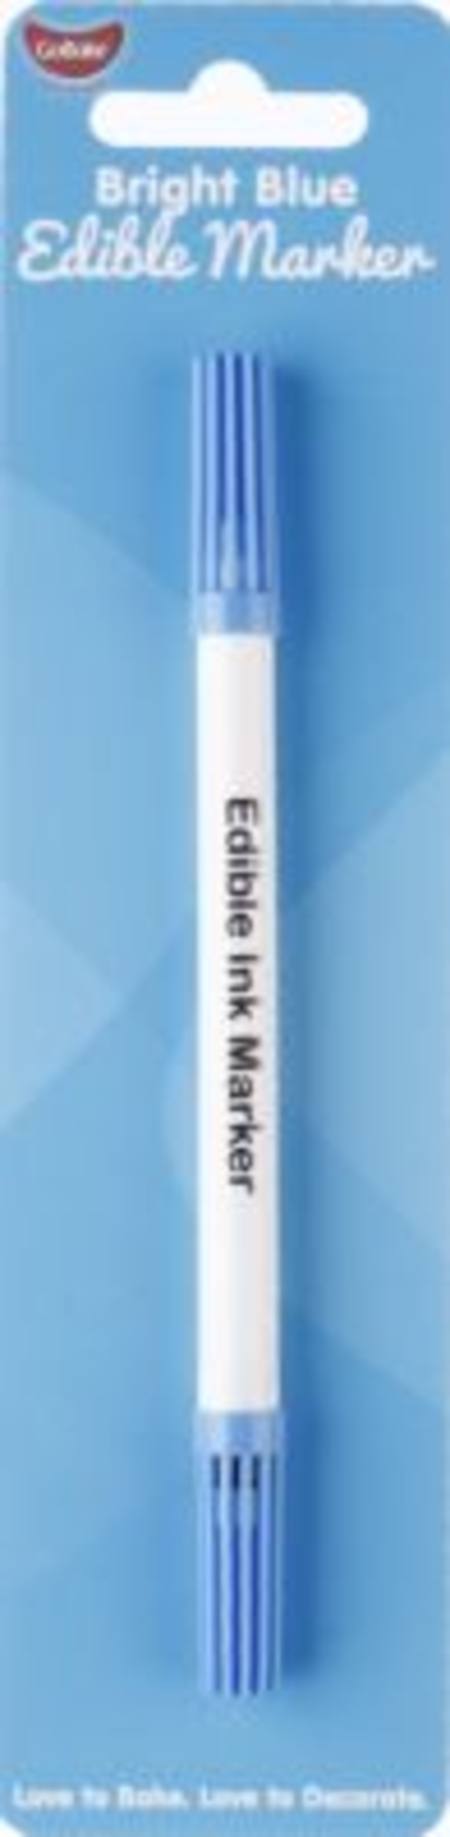 Edible Marker Pen Bright Blue